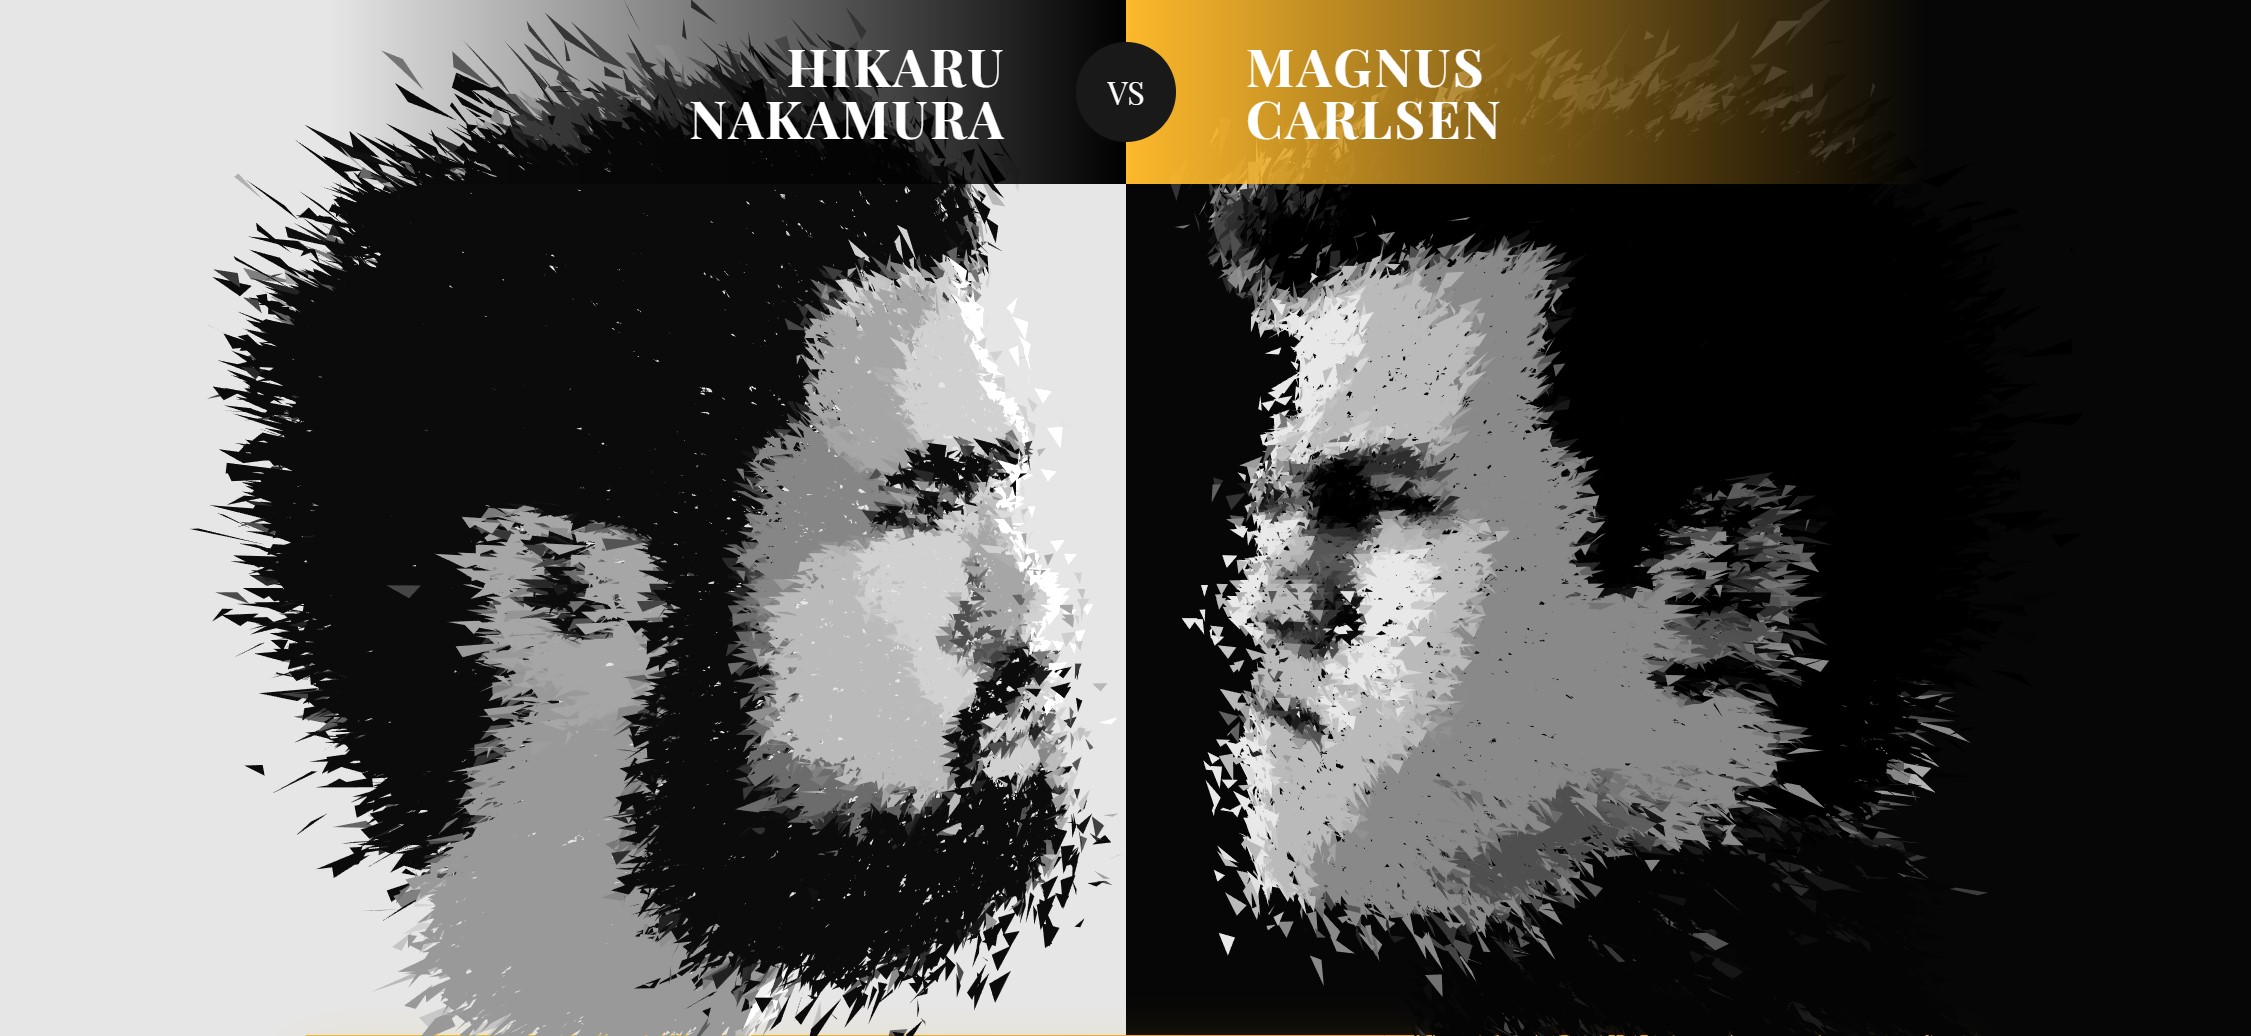 ROOK BLUNDER!! Magnus Carlsen vs Hikaru Nakamura